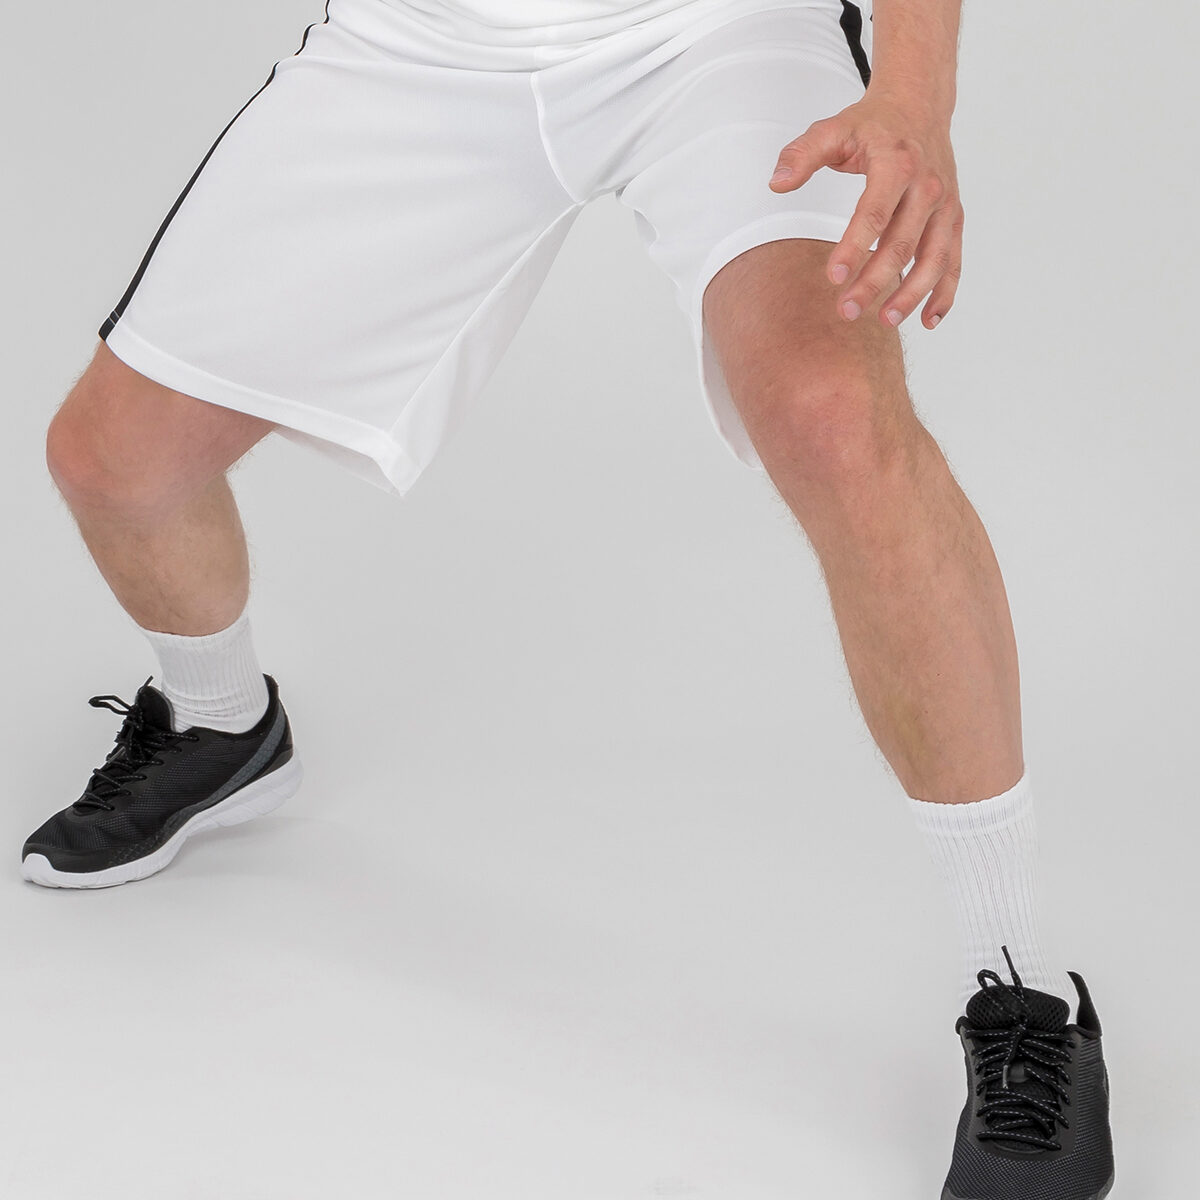 Basketball quick-dry shorts